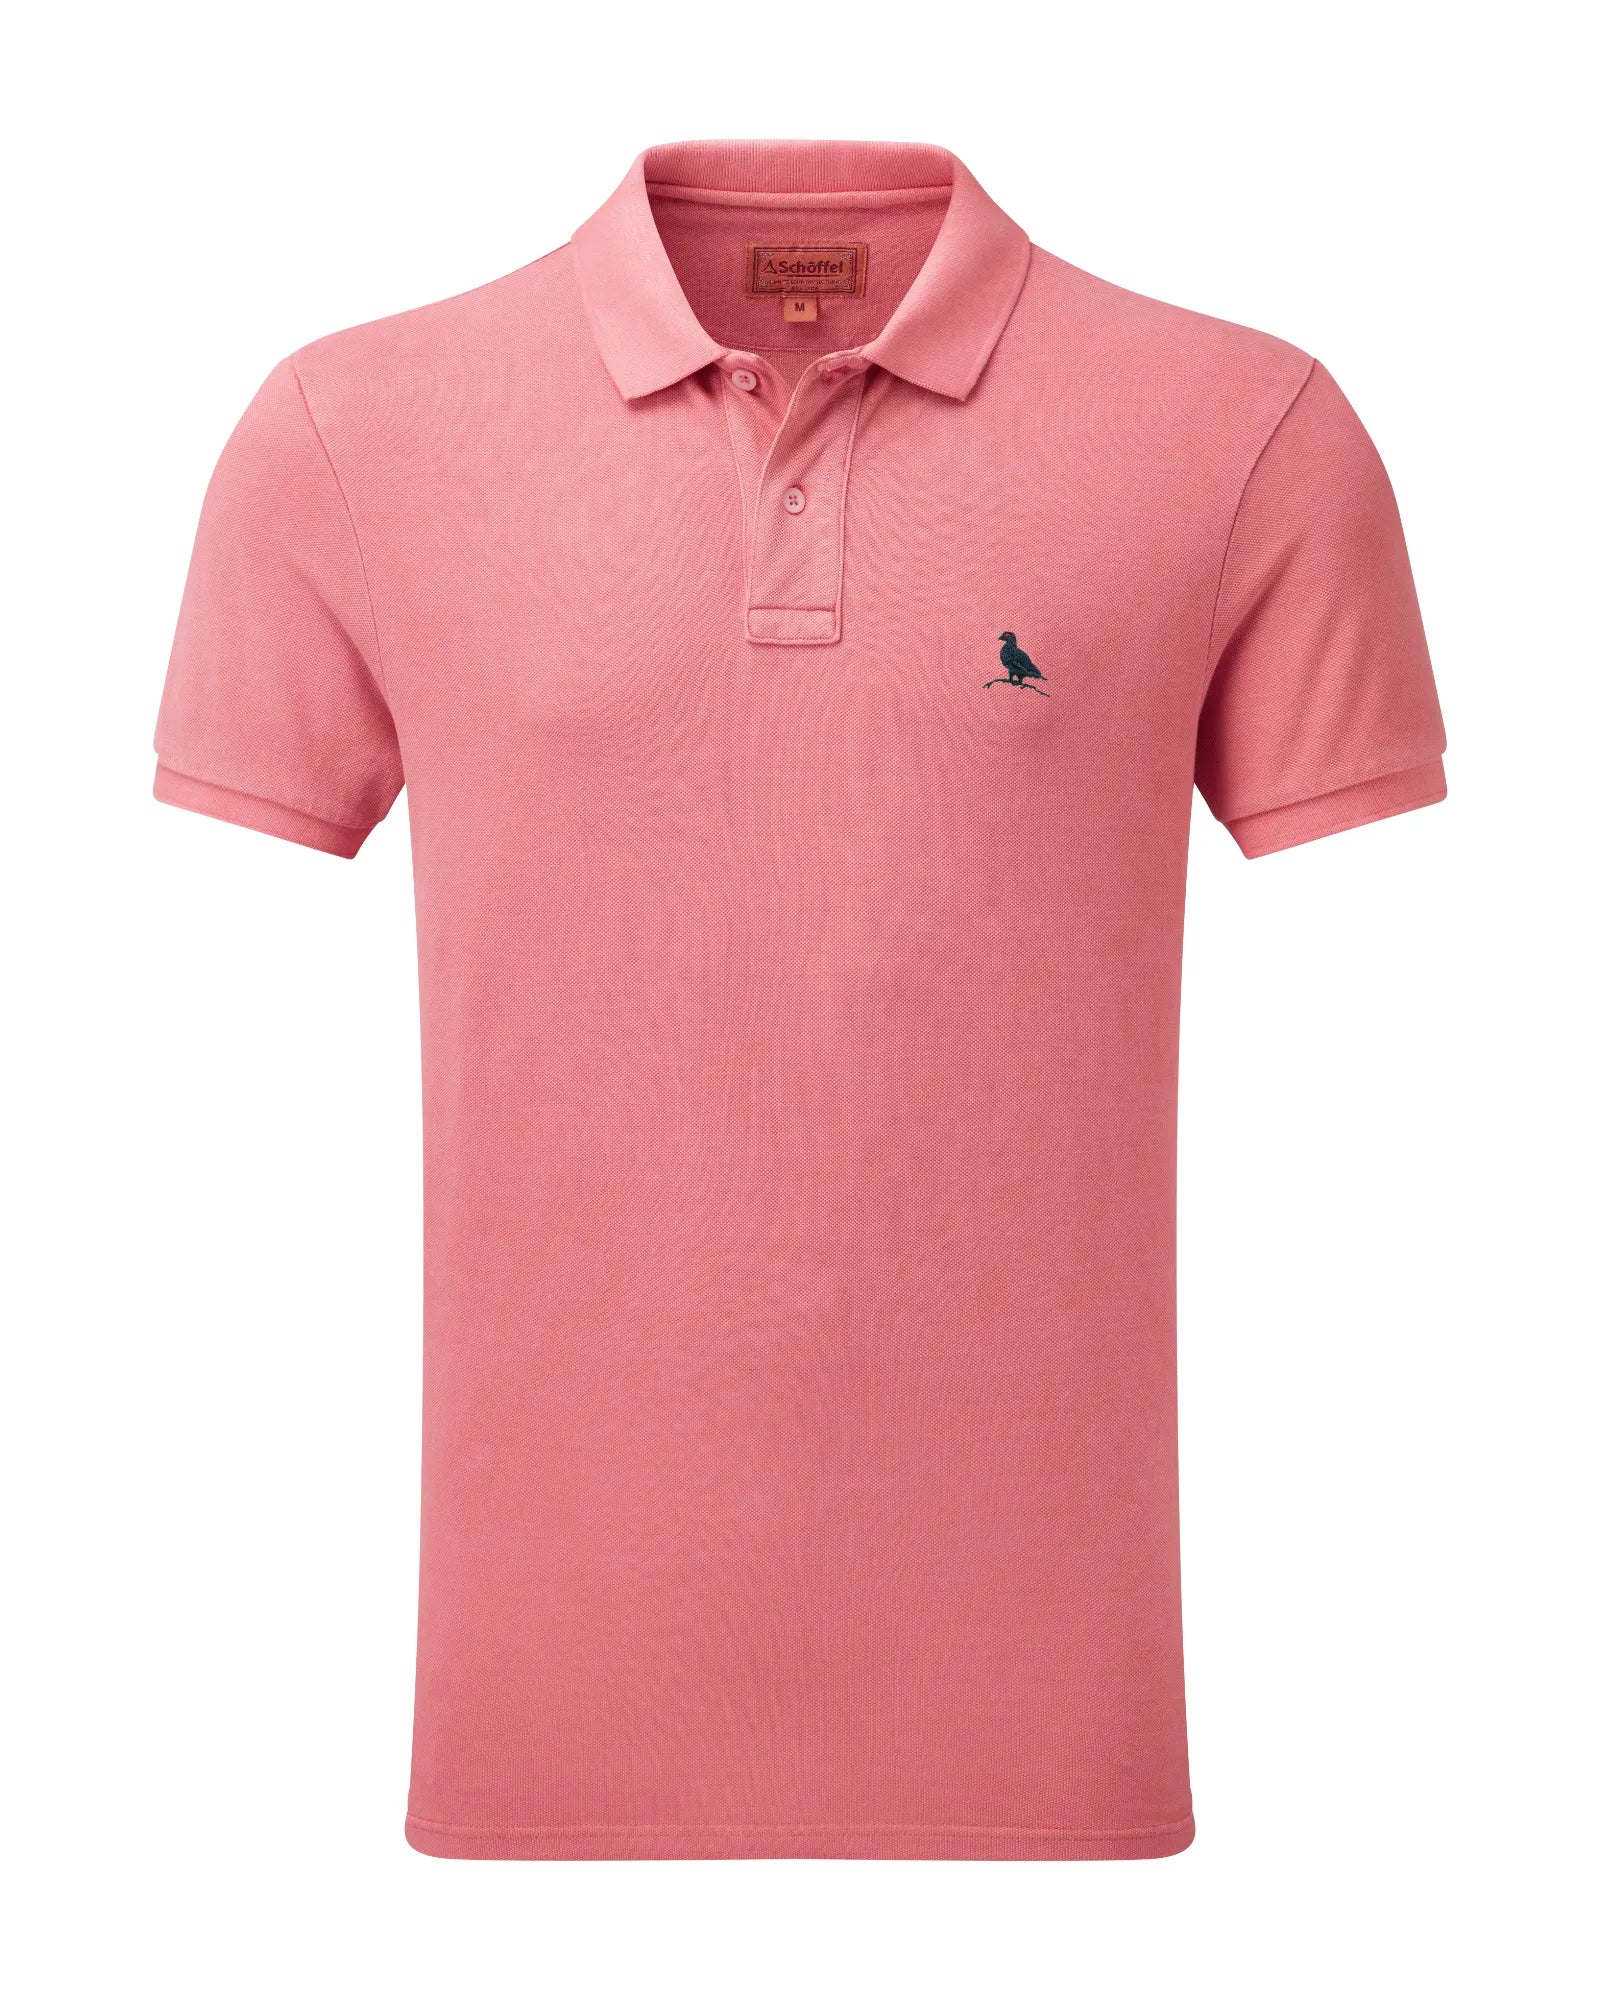 St Ives Coral Pique Polo Shirt